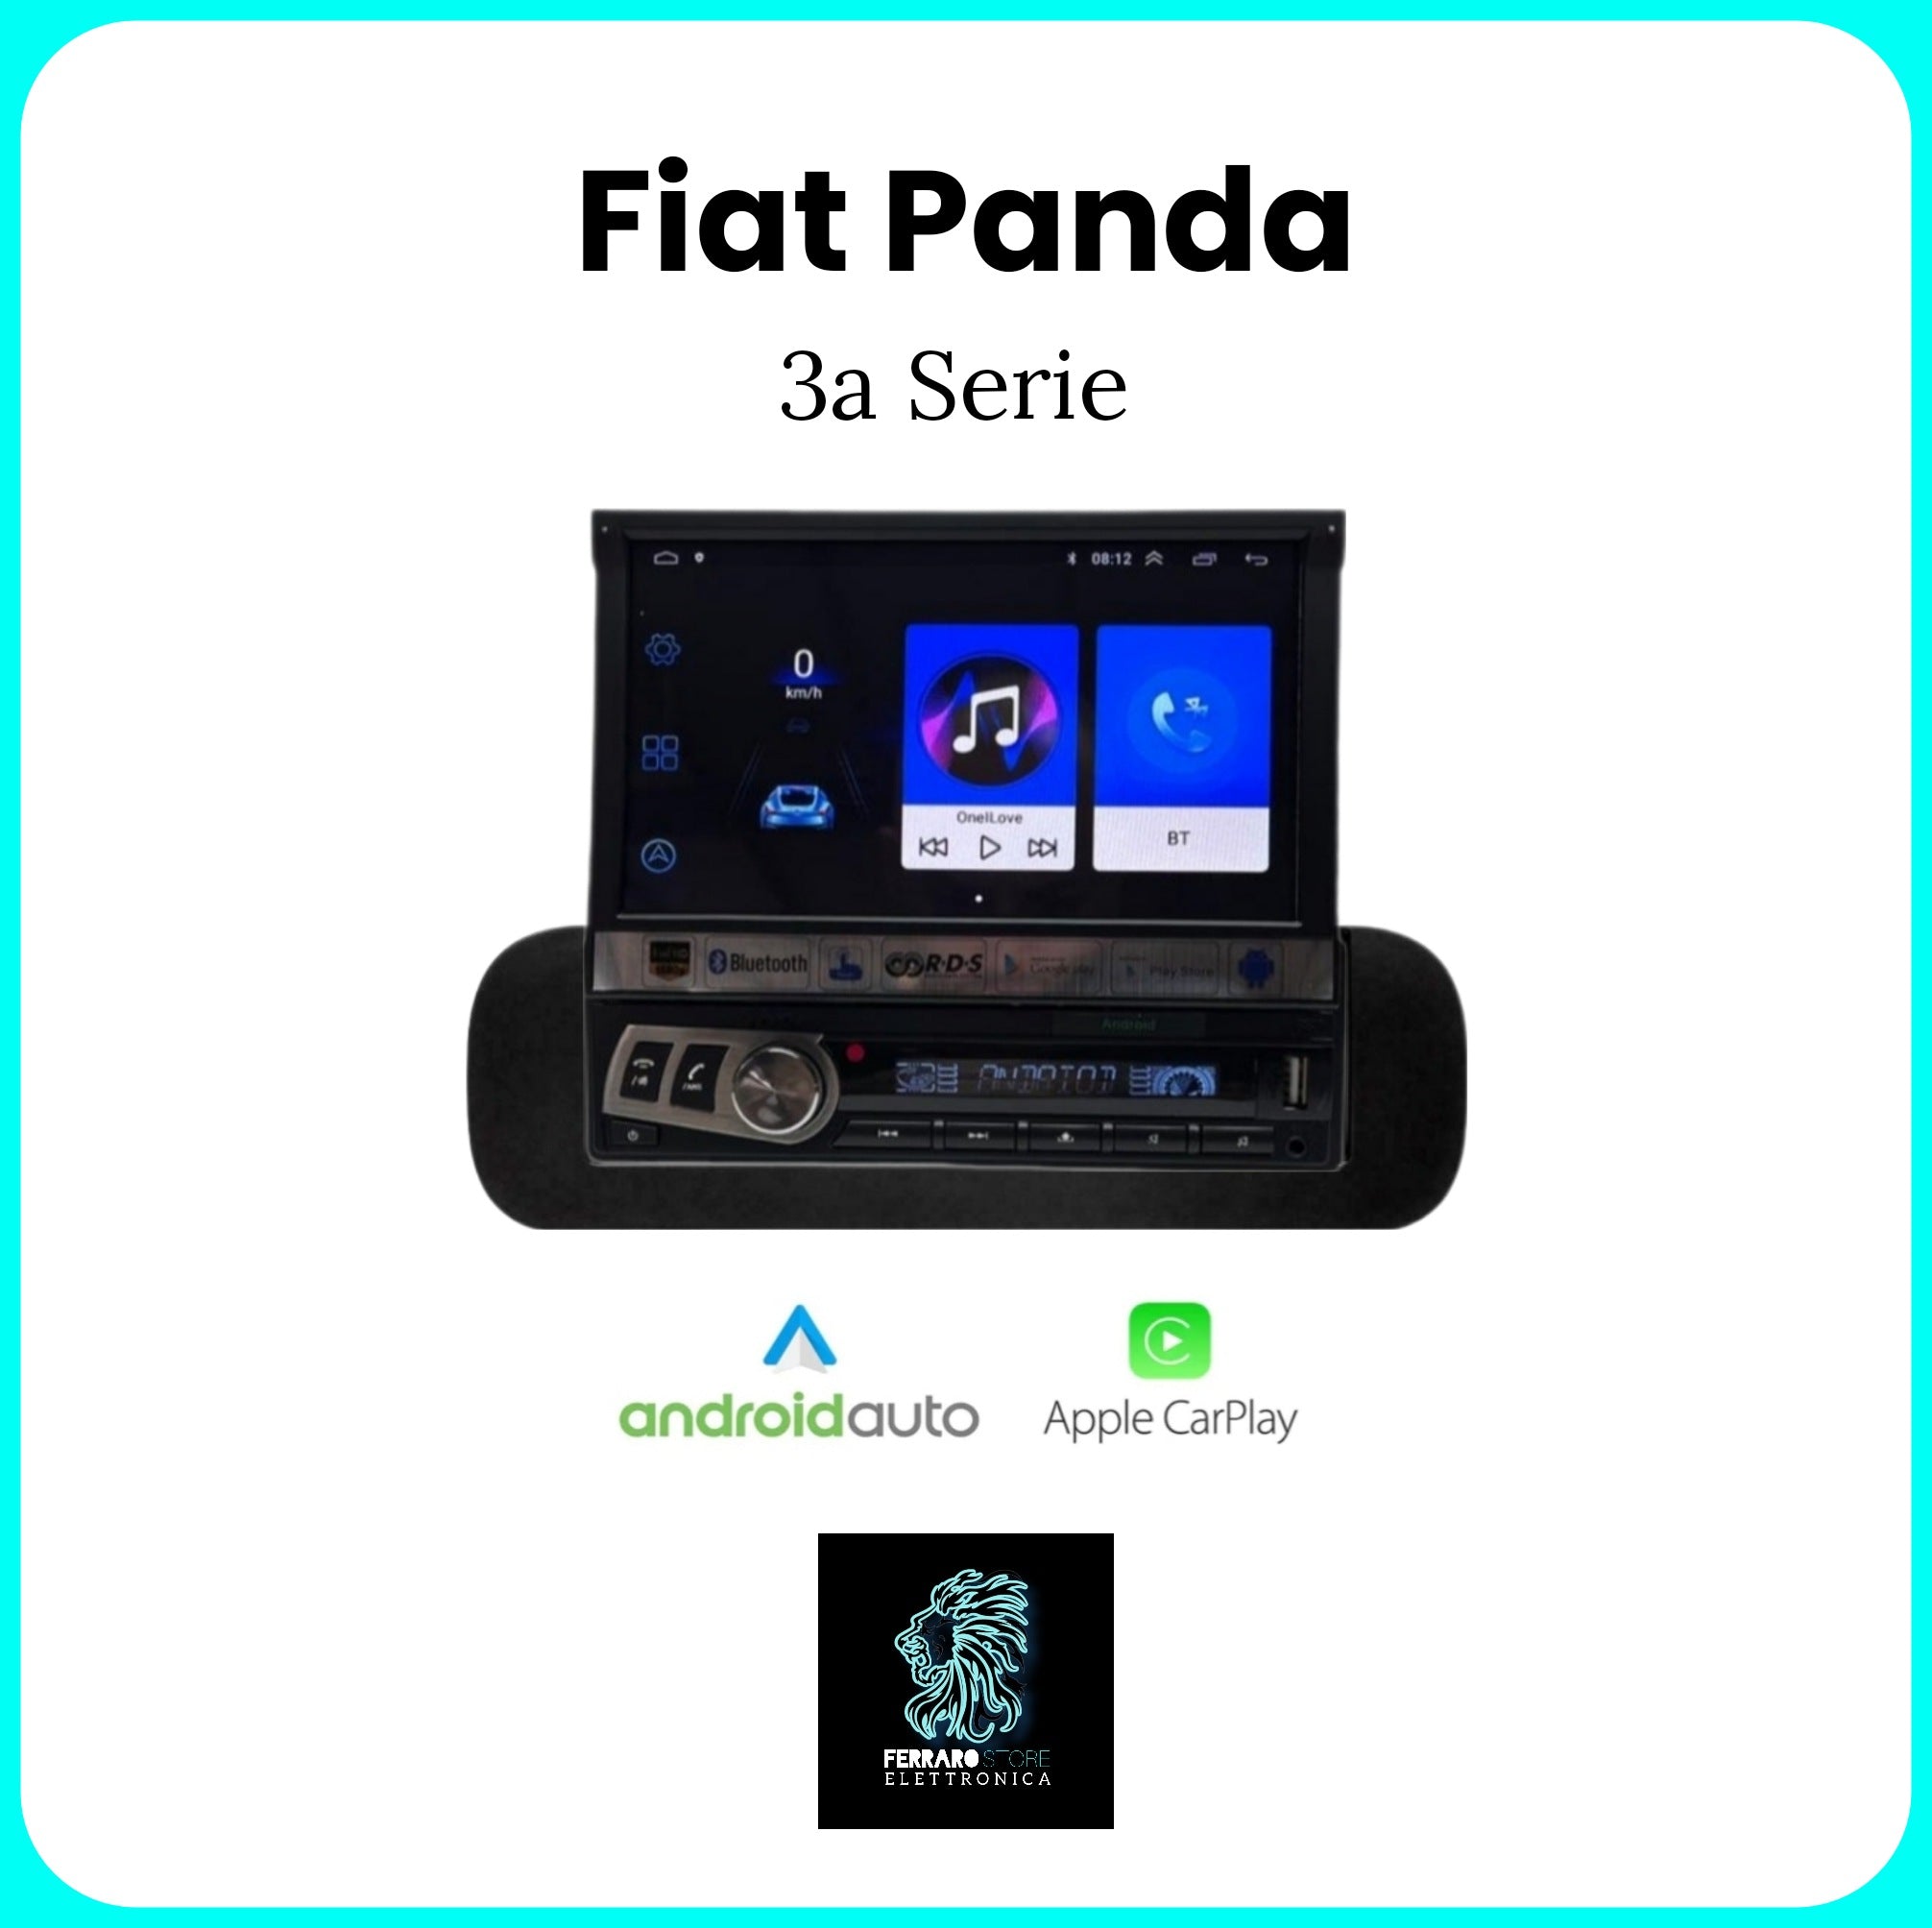 Autoradio per FIAT Panda 3a - 1Din 7"Pollici, Motorizzato Android, GPS, WiFi, Radio, Bluetooth, FM, SWC, PlayStore